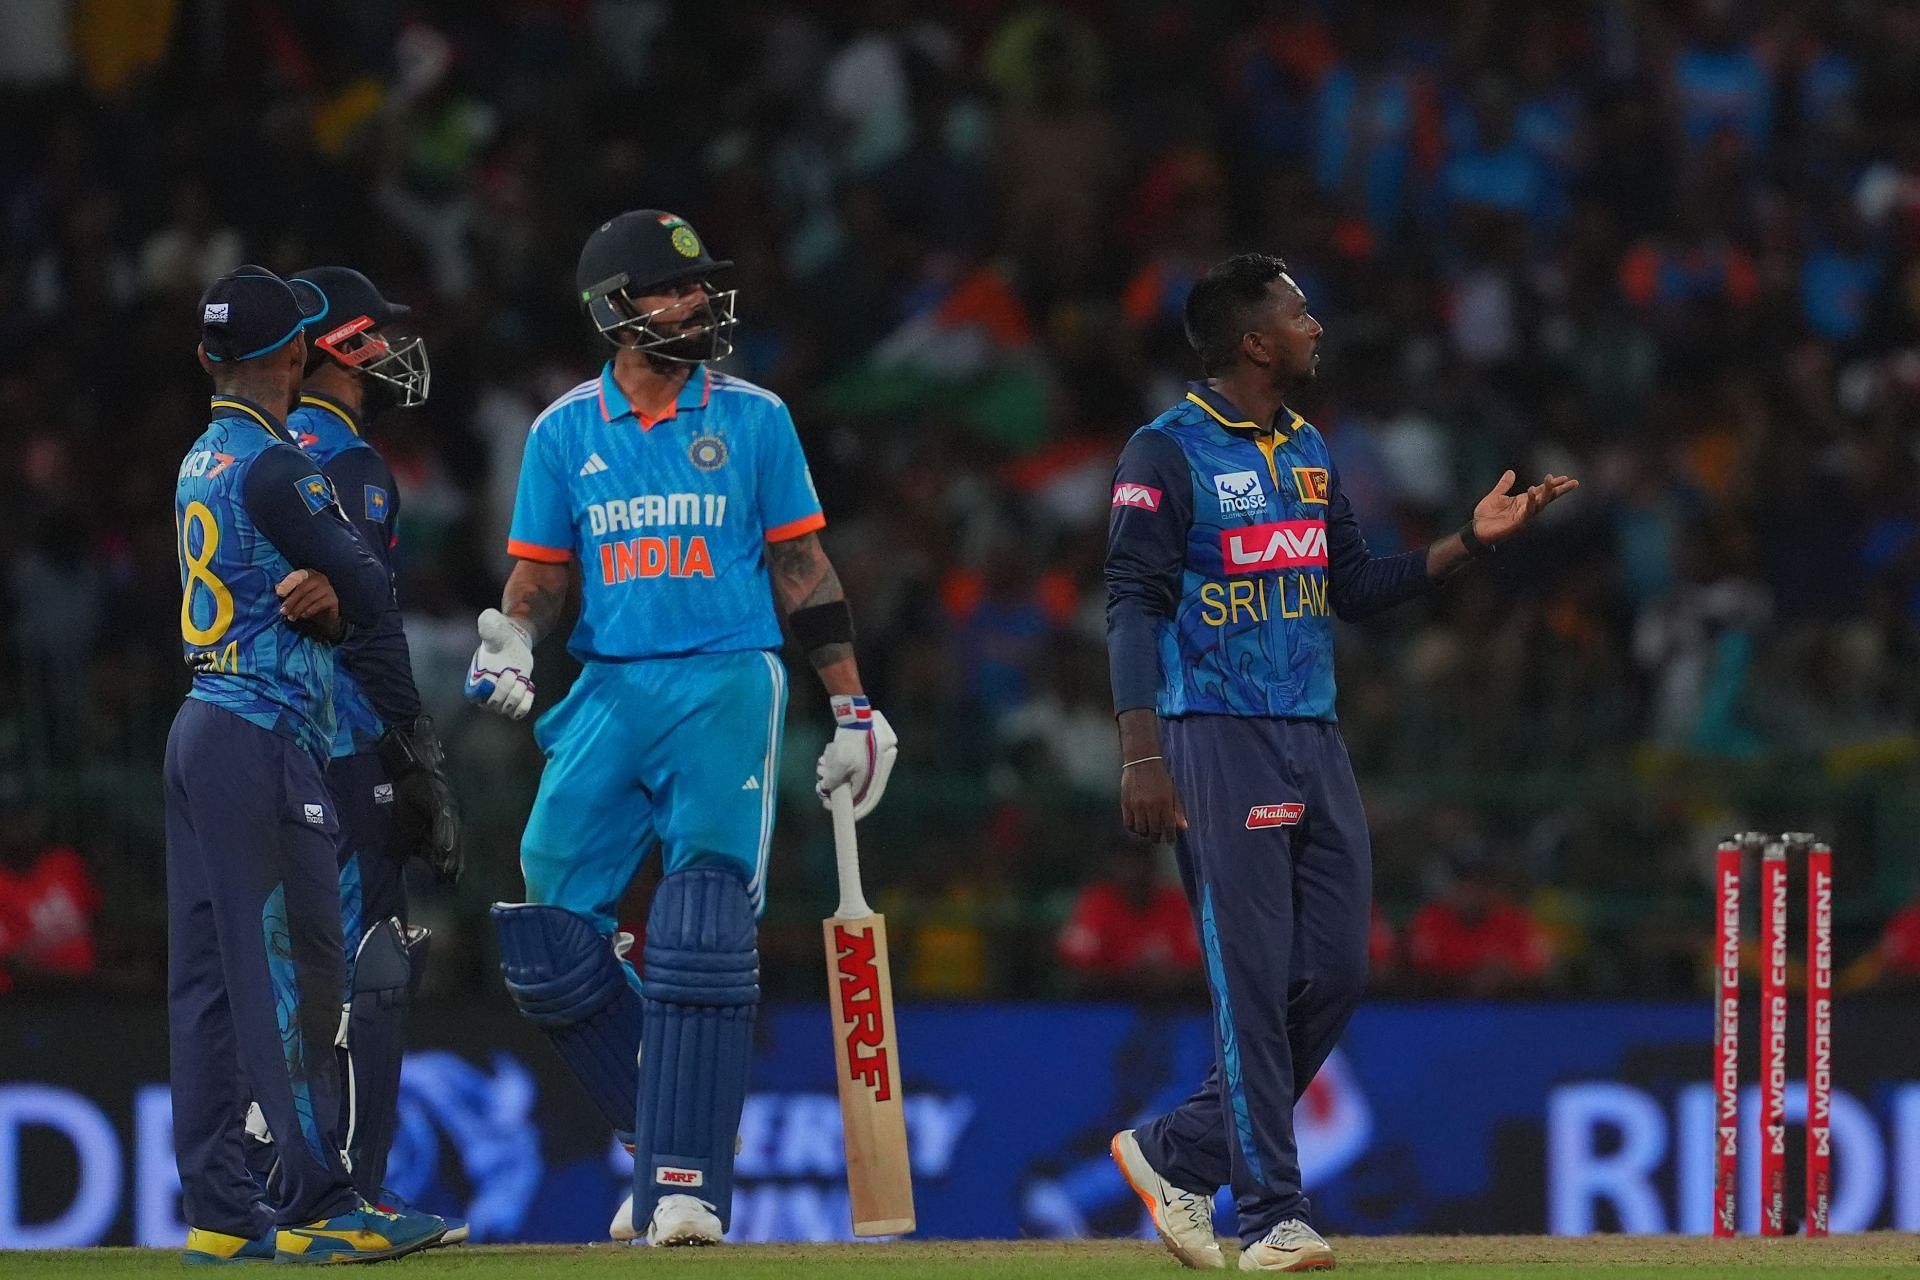 India vs Sri Lanka Highlights: 3 moments that generated buzz among fans in 2nd ODI ft. Virat Kohli